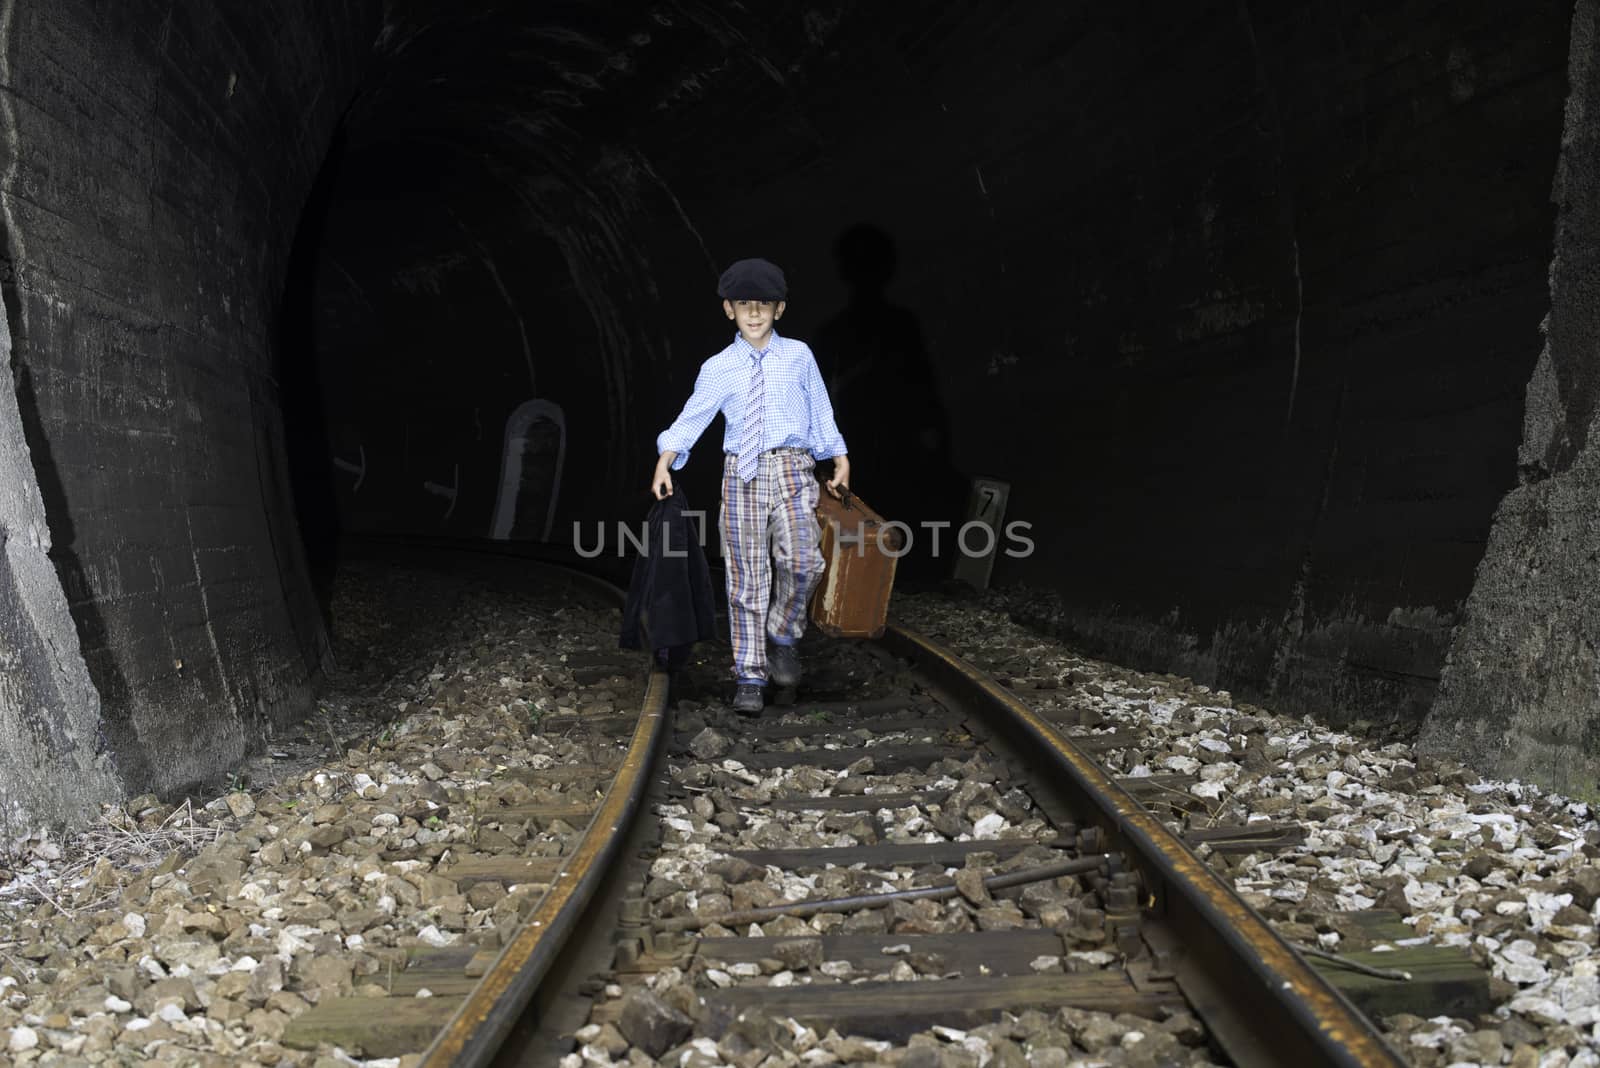 Child walking on railway road with vintage siutcase.